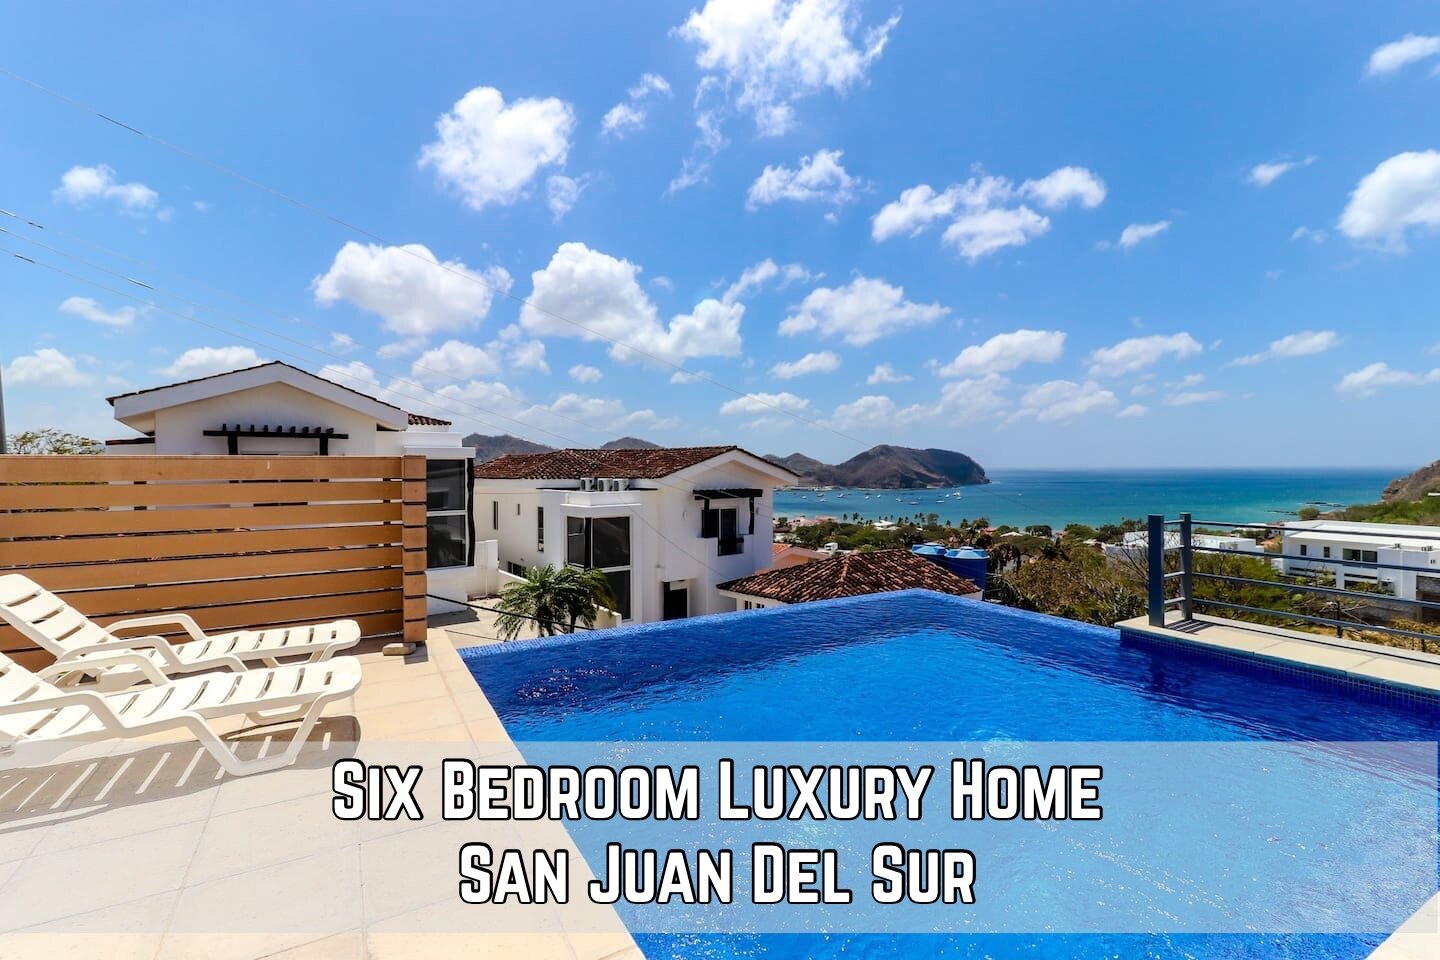 Six Bedroom Luxury Home For Sale San Juan Del Sur Nicaragua.jpg